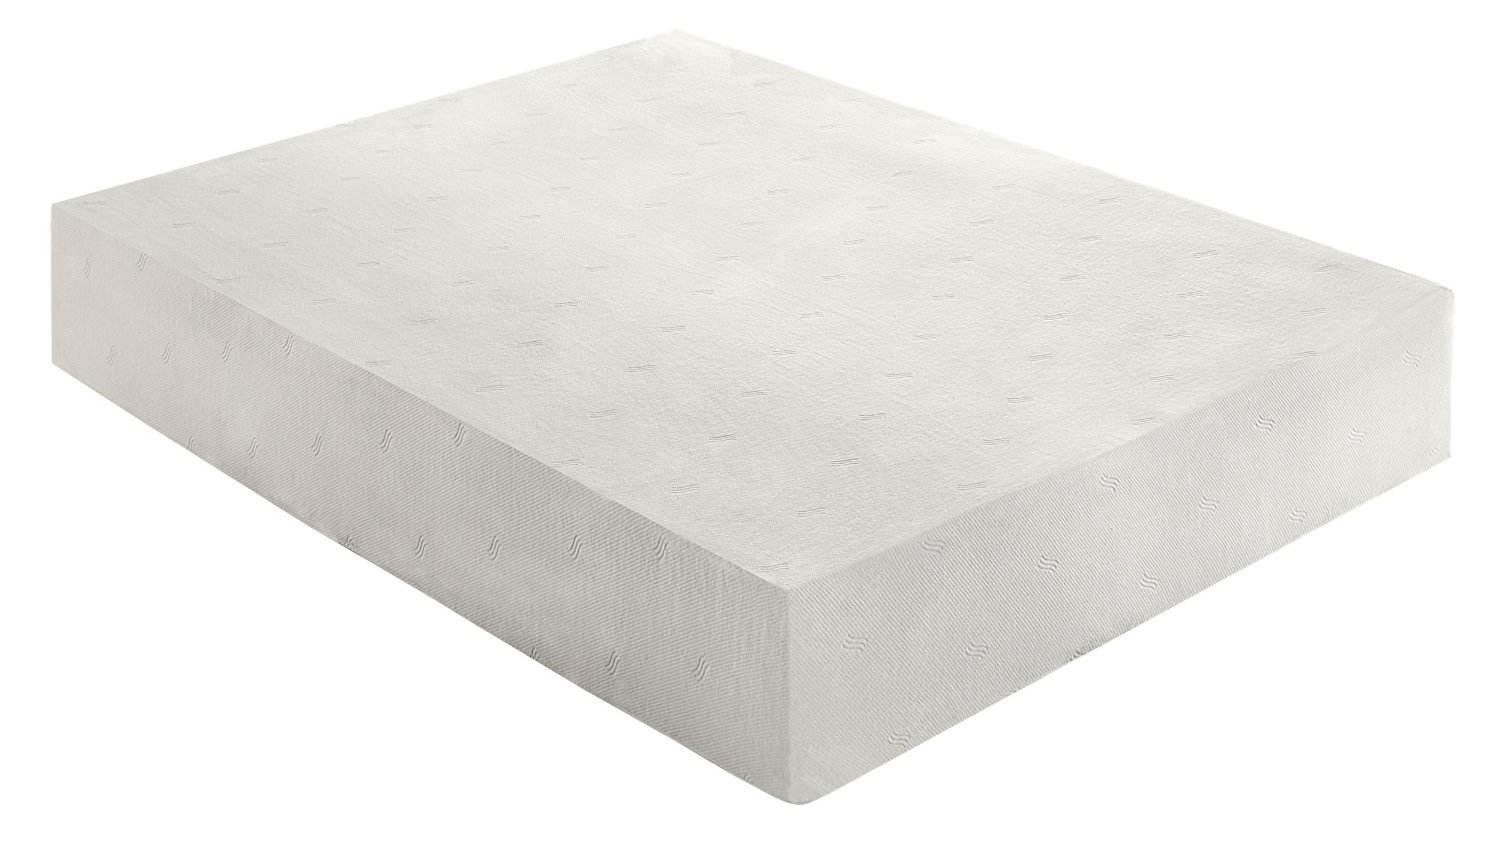 10-inch suretemp memory foam mattress